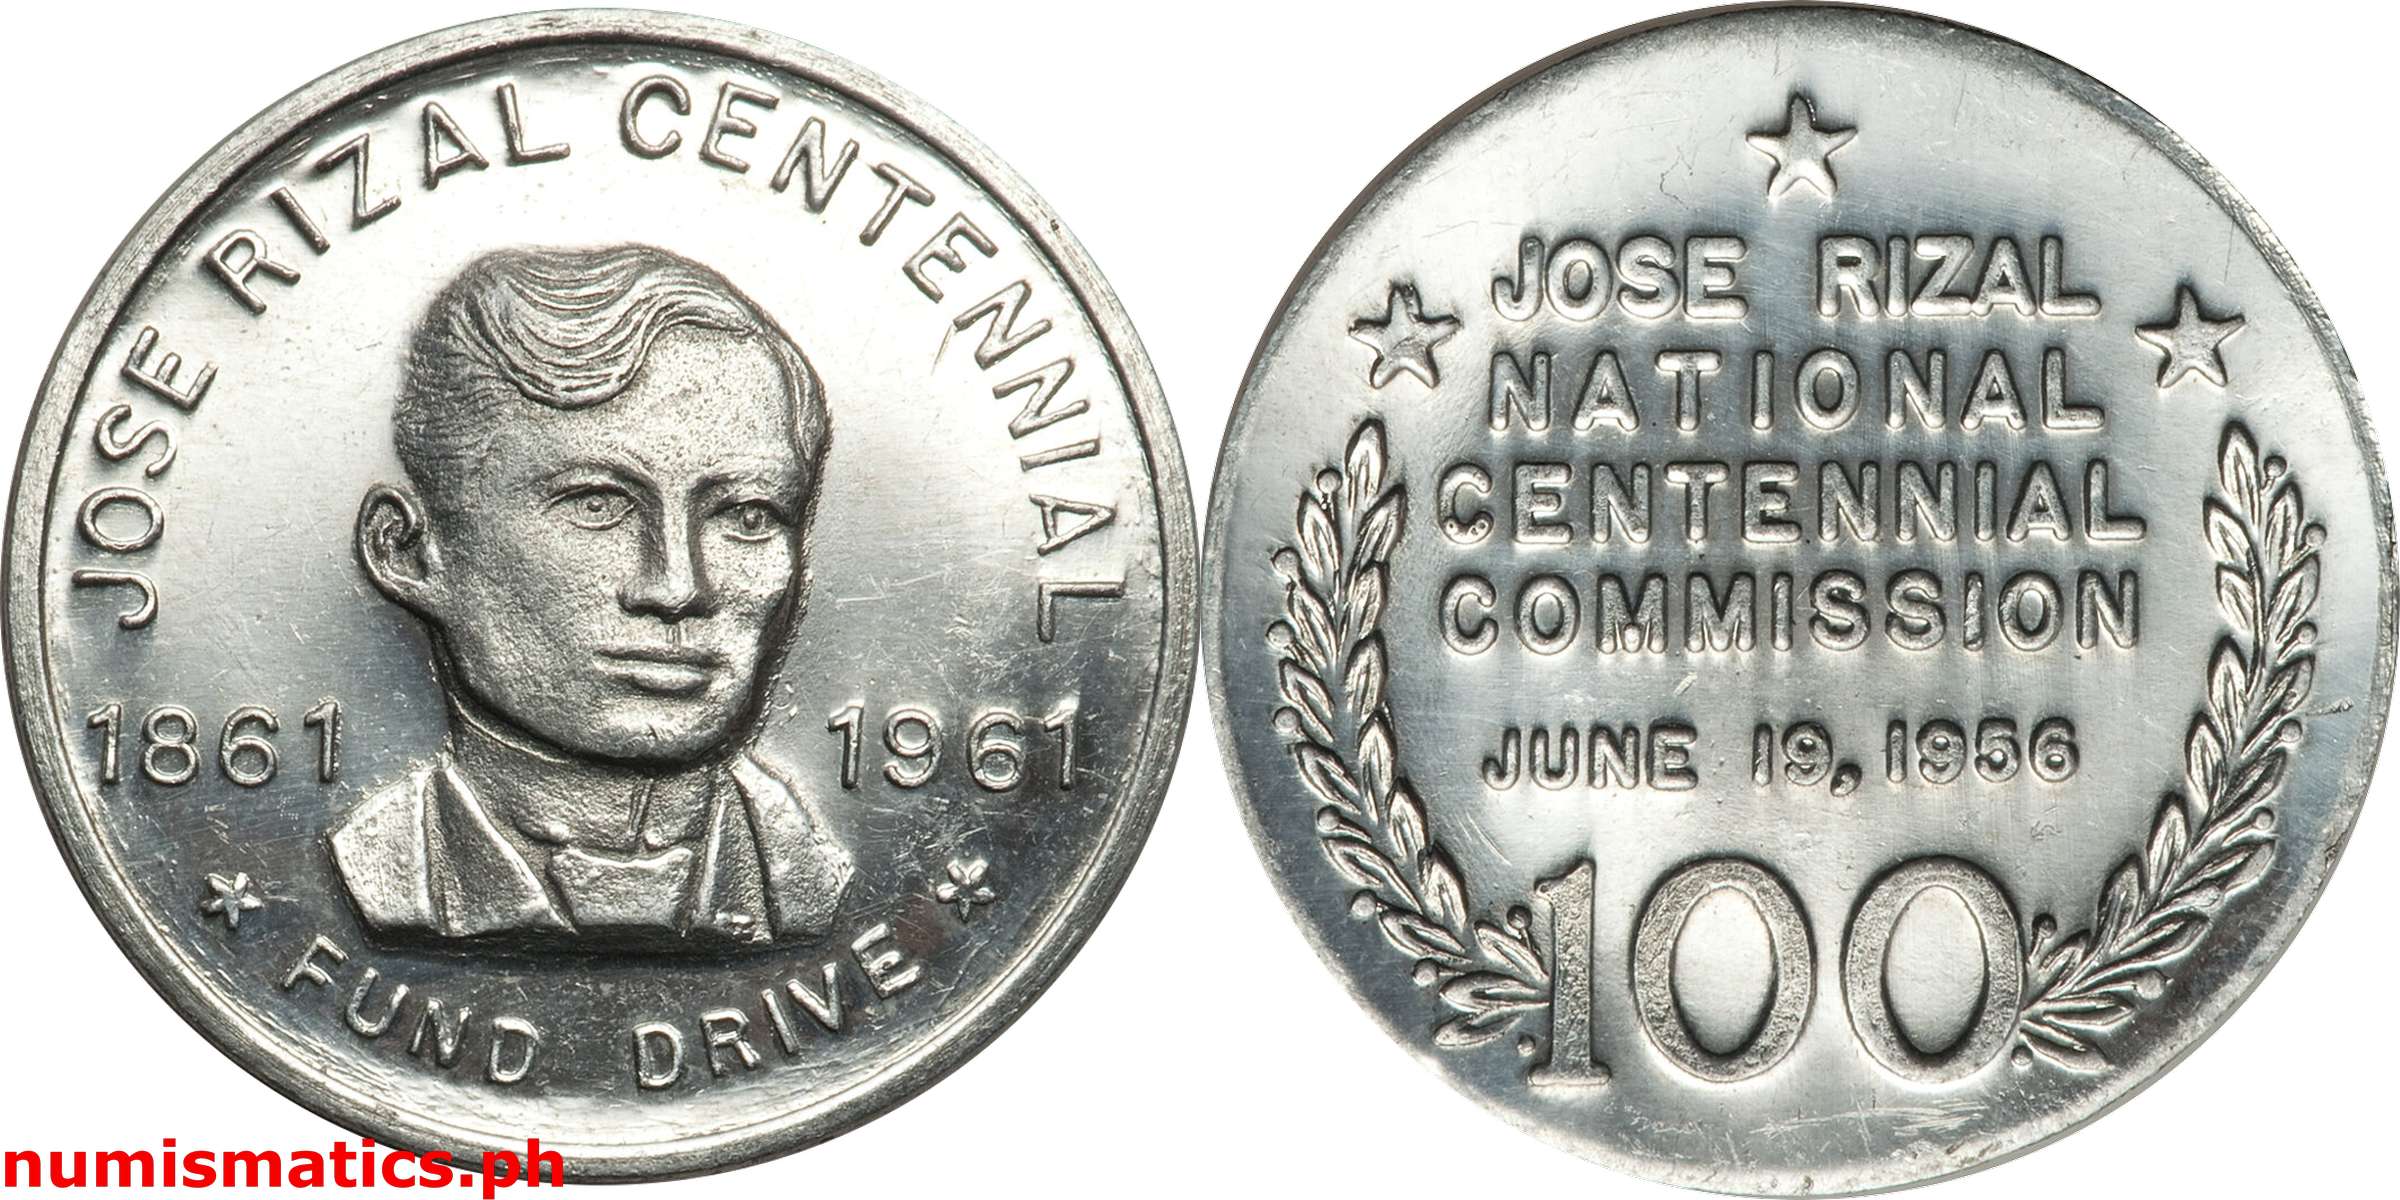 1956 Jose Rizal Centennial Fund Drive Medal White Metal